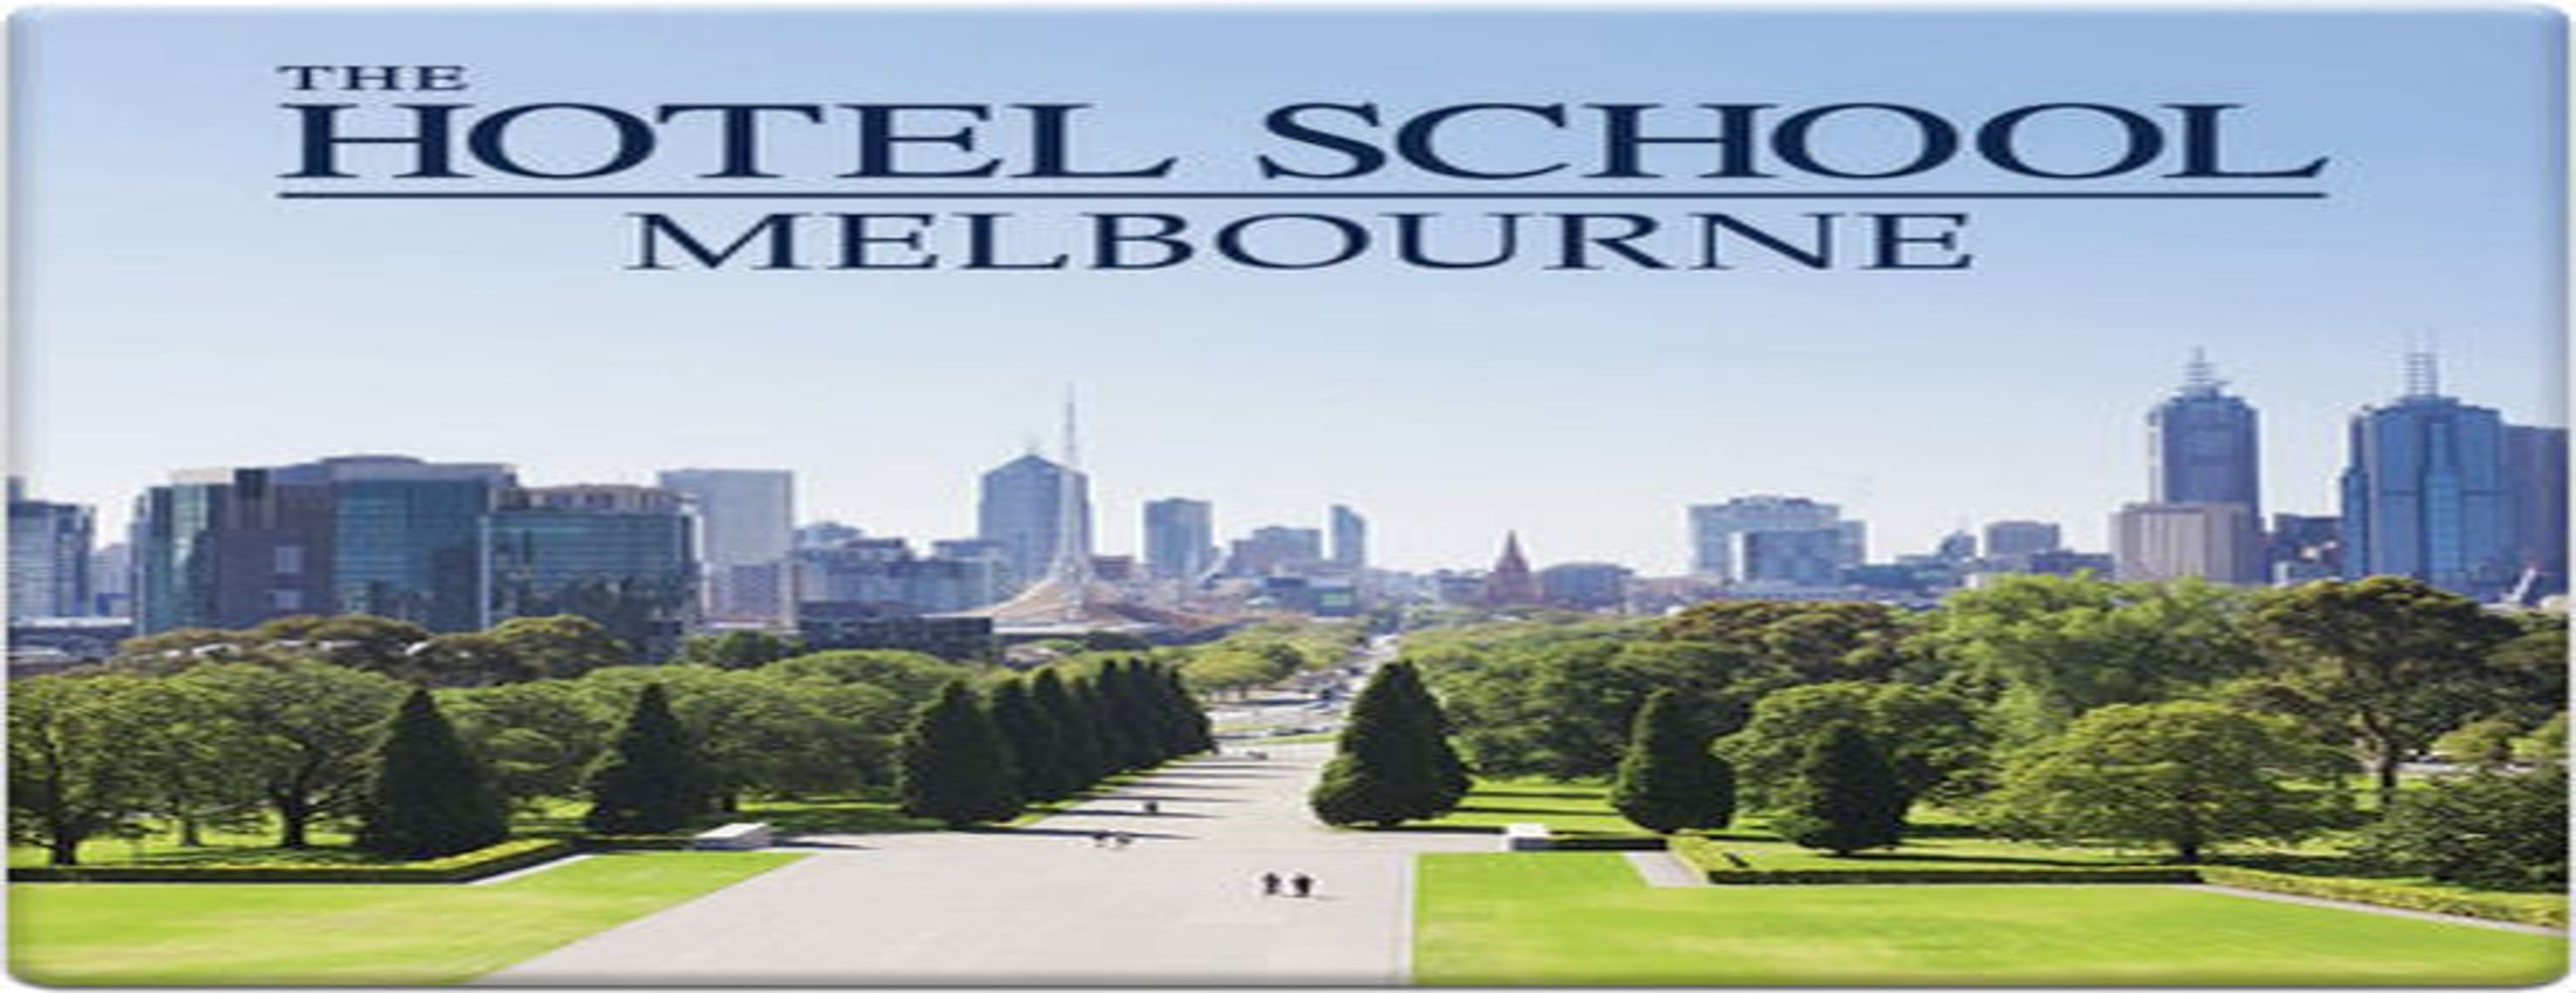 Hotel School Australia